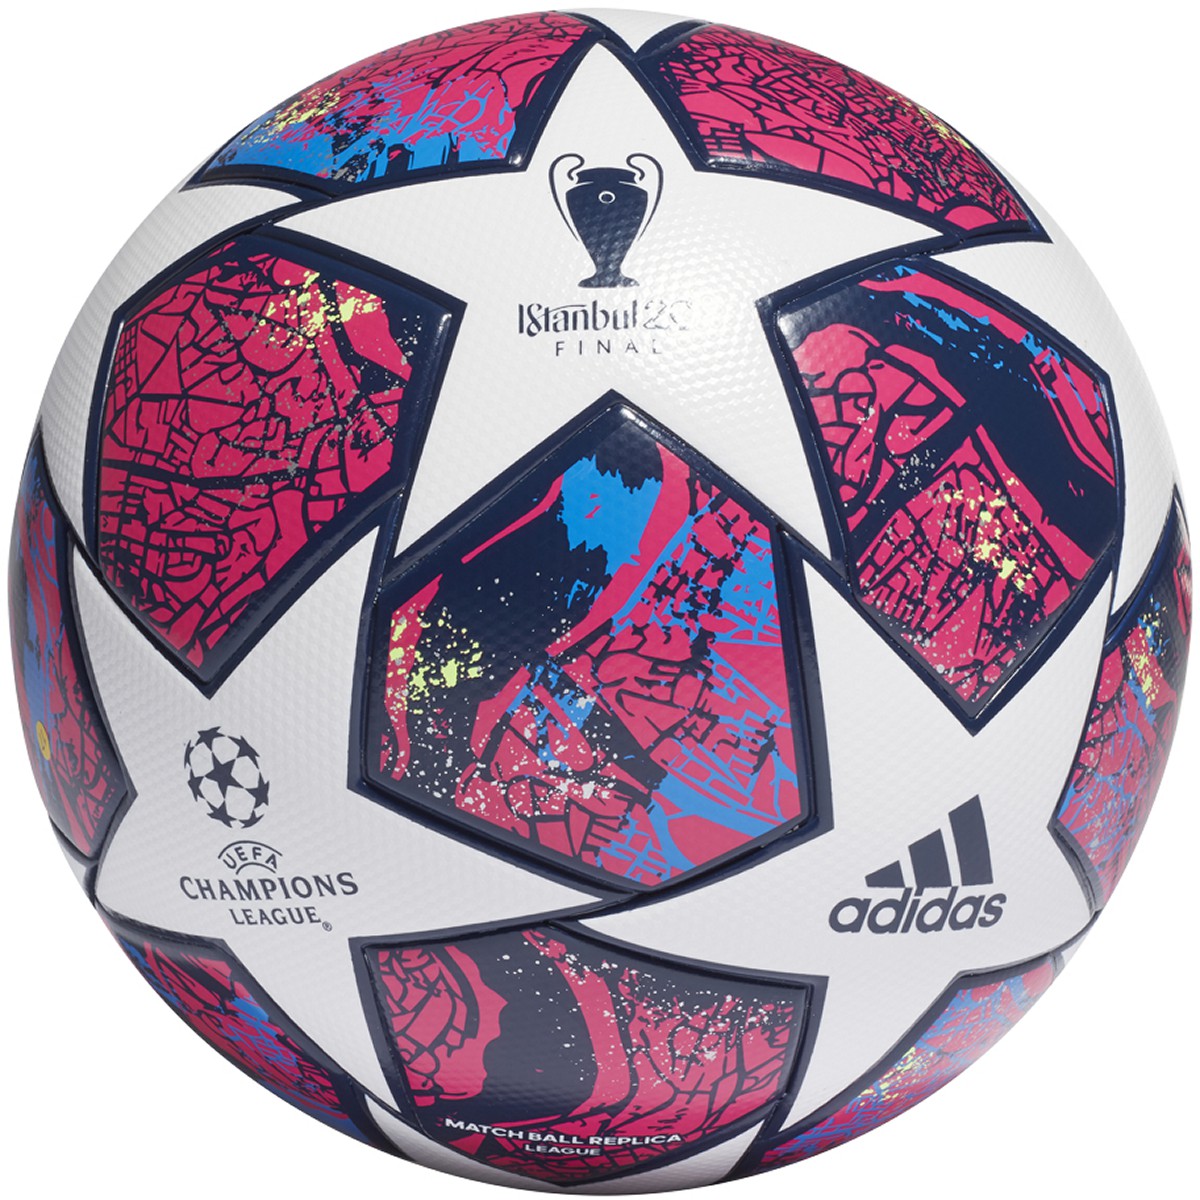 uefa champions league soccer ball